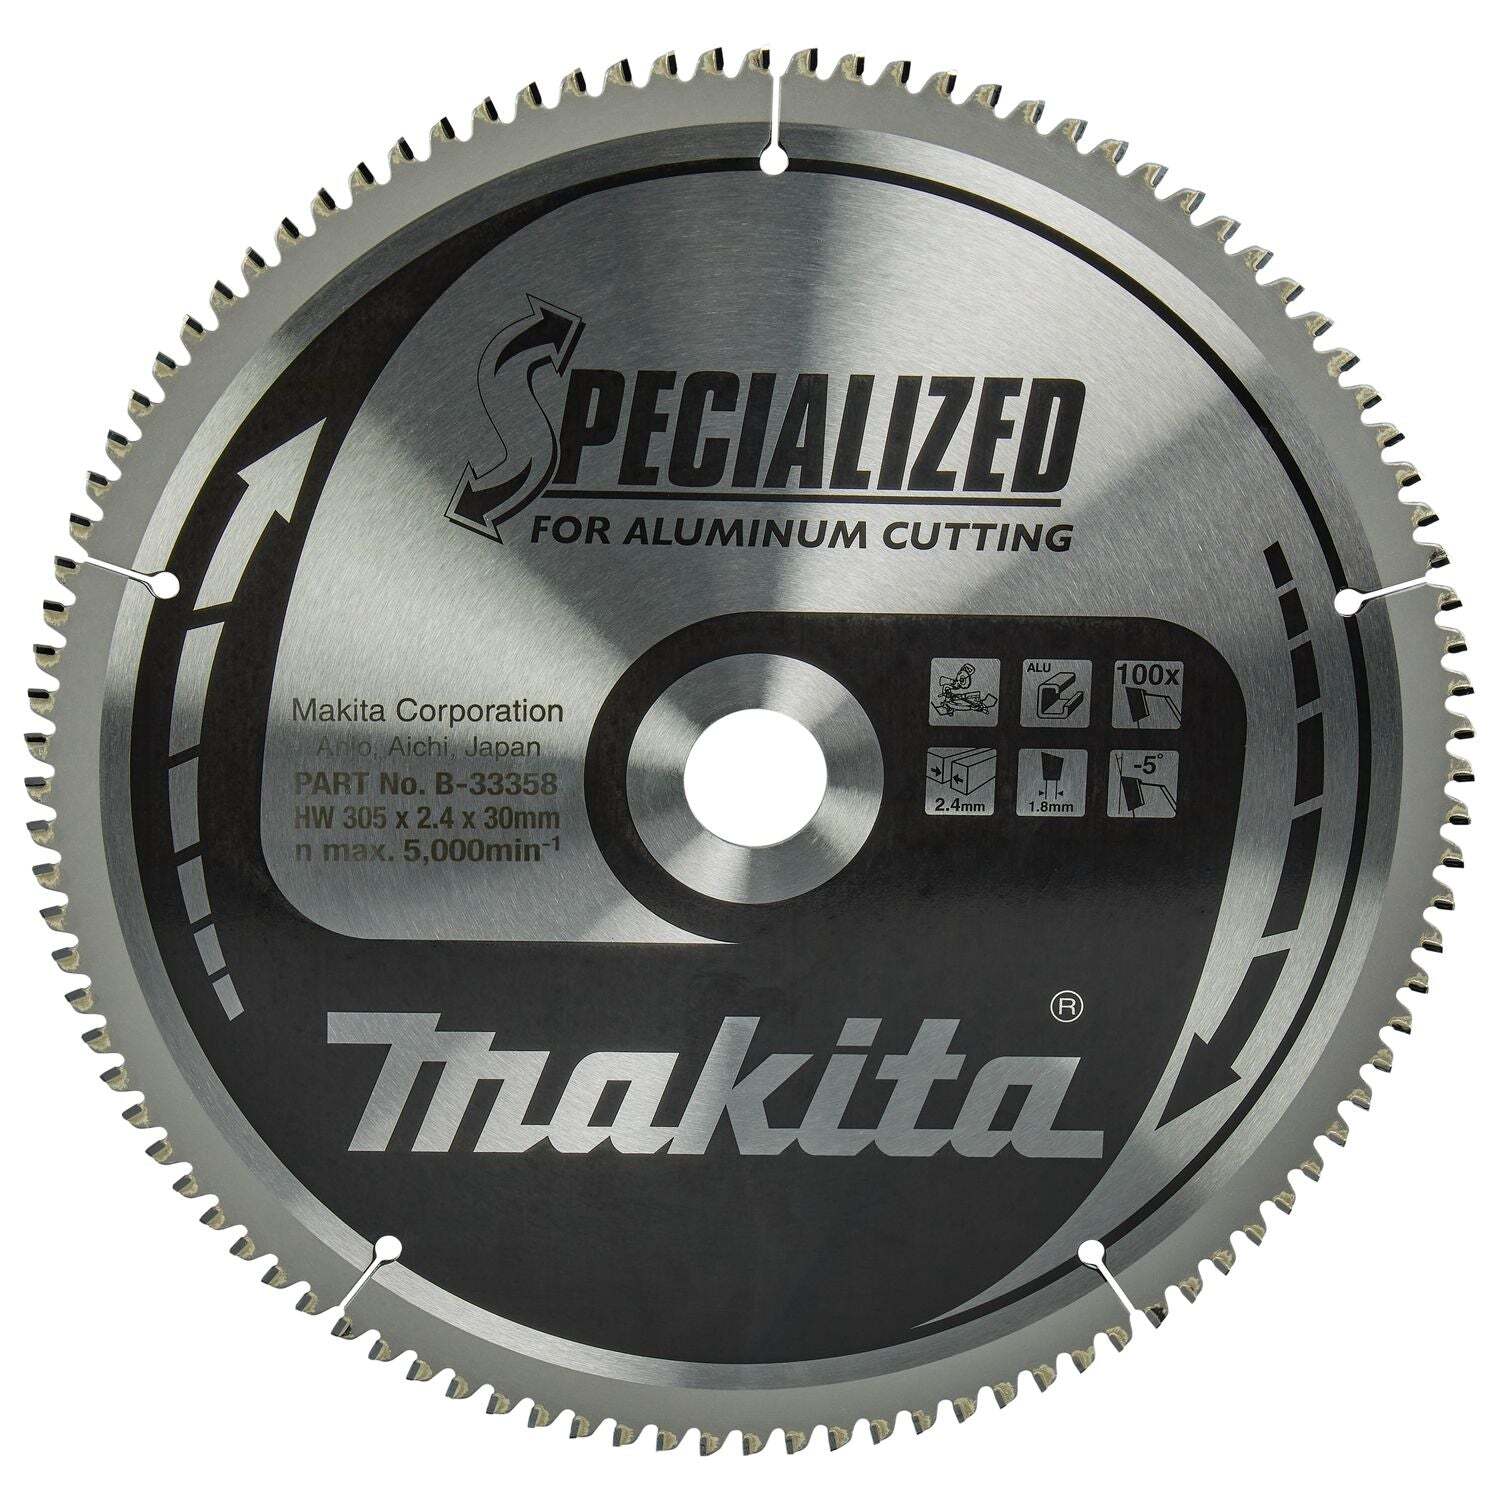 Makita B-33358 Afkortzaagblad voor Aluminium | Specialized | Ø 305mm Asgat 30mm 100T